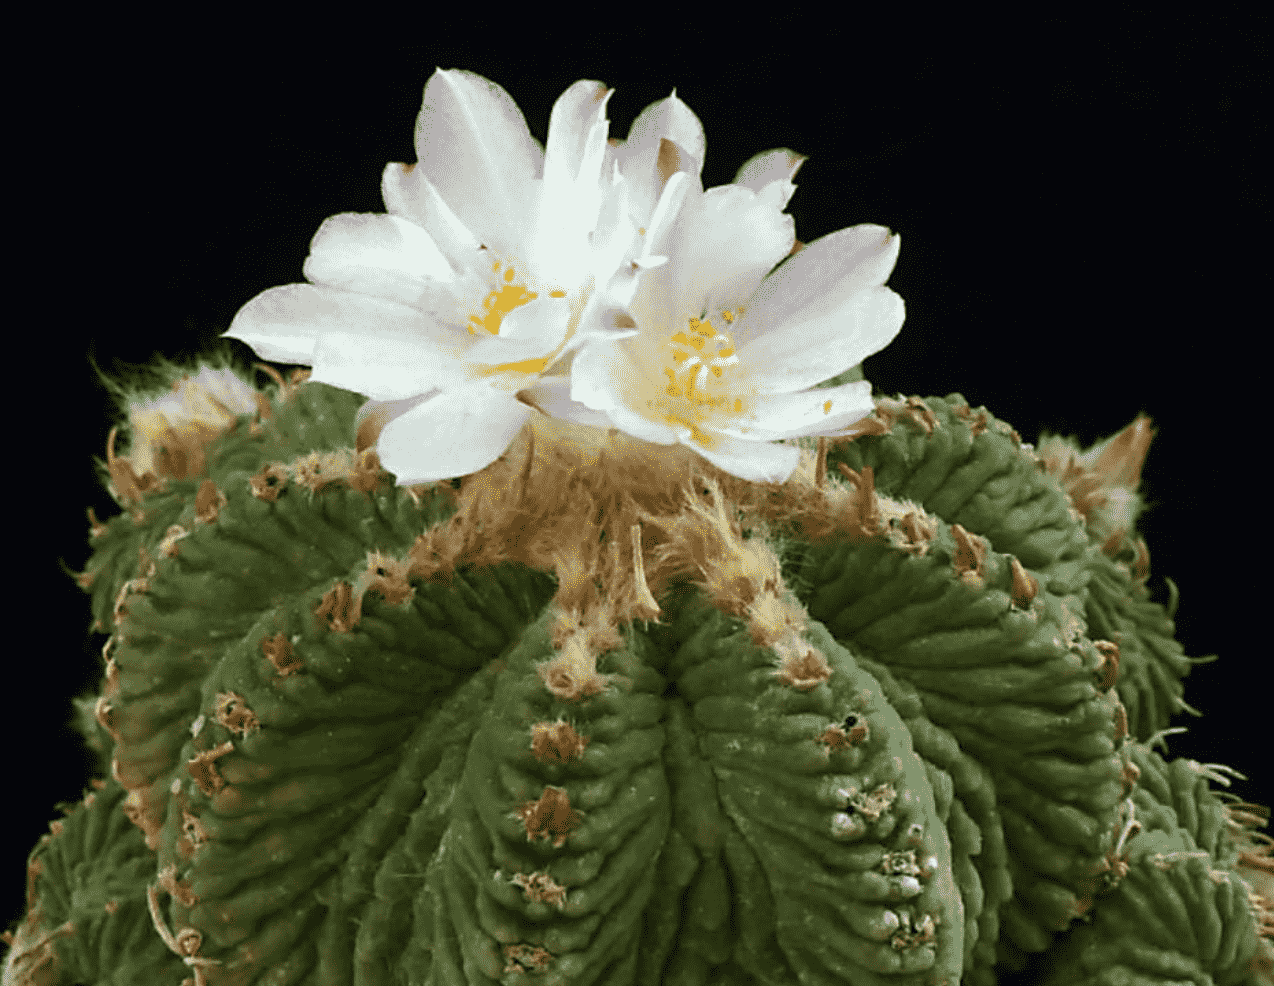 Aztekium Ritteri 'Aztec Cactus'